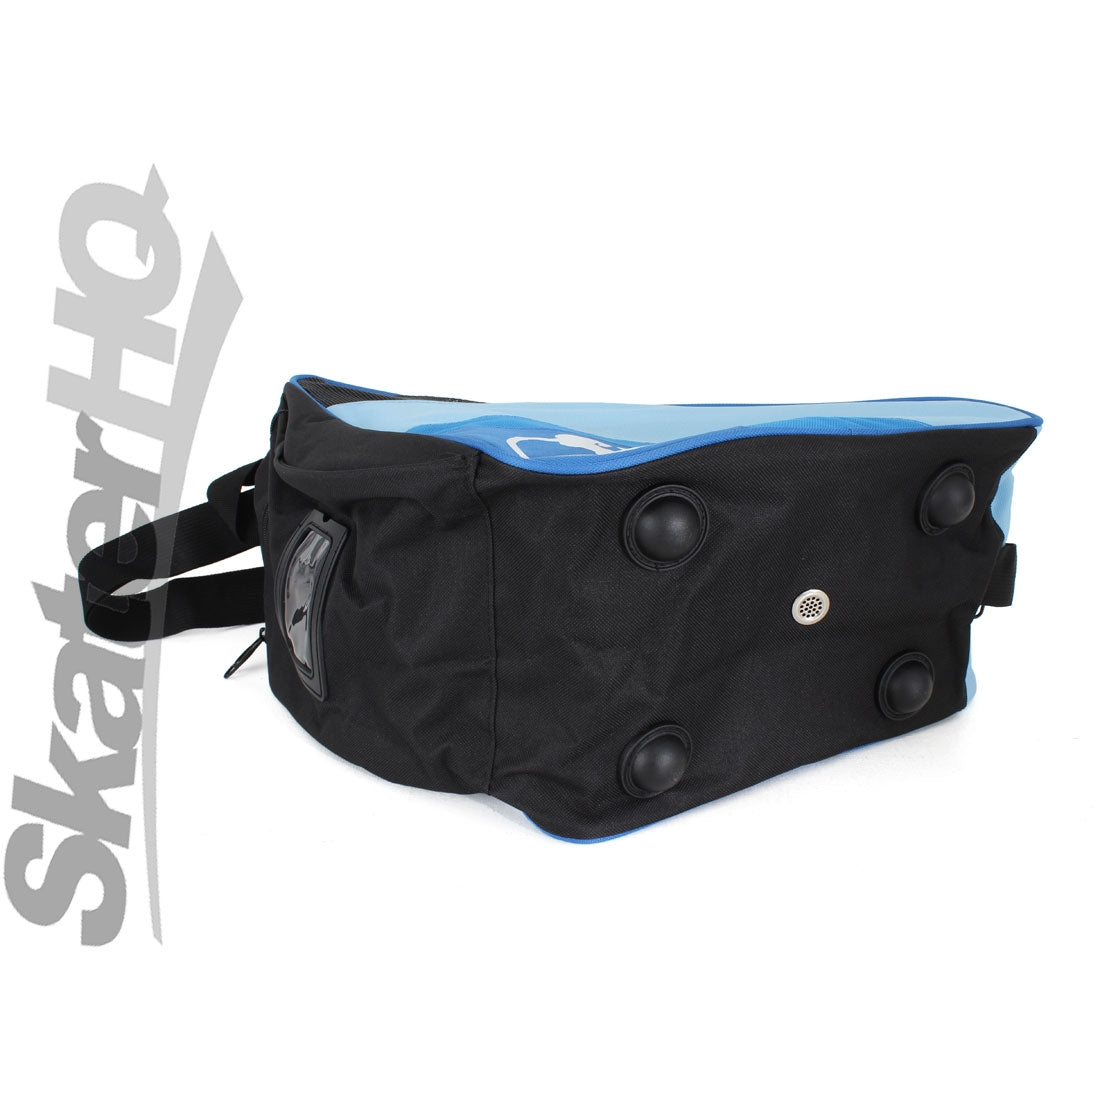 SFR Skate Bag V2 - Blue Bags and Backpacks